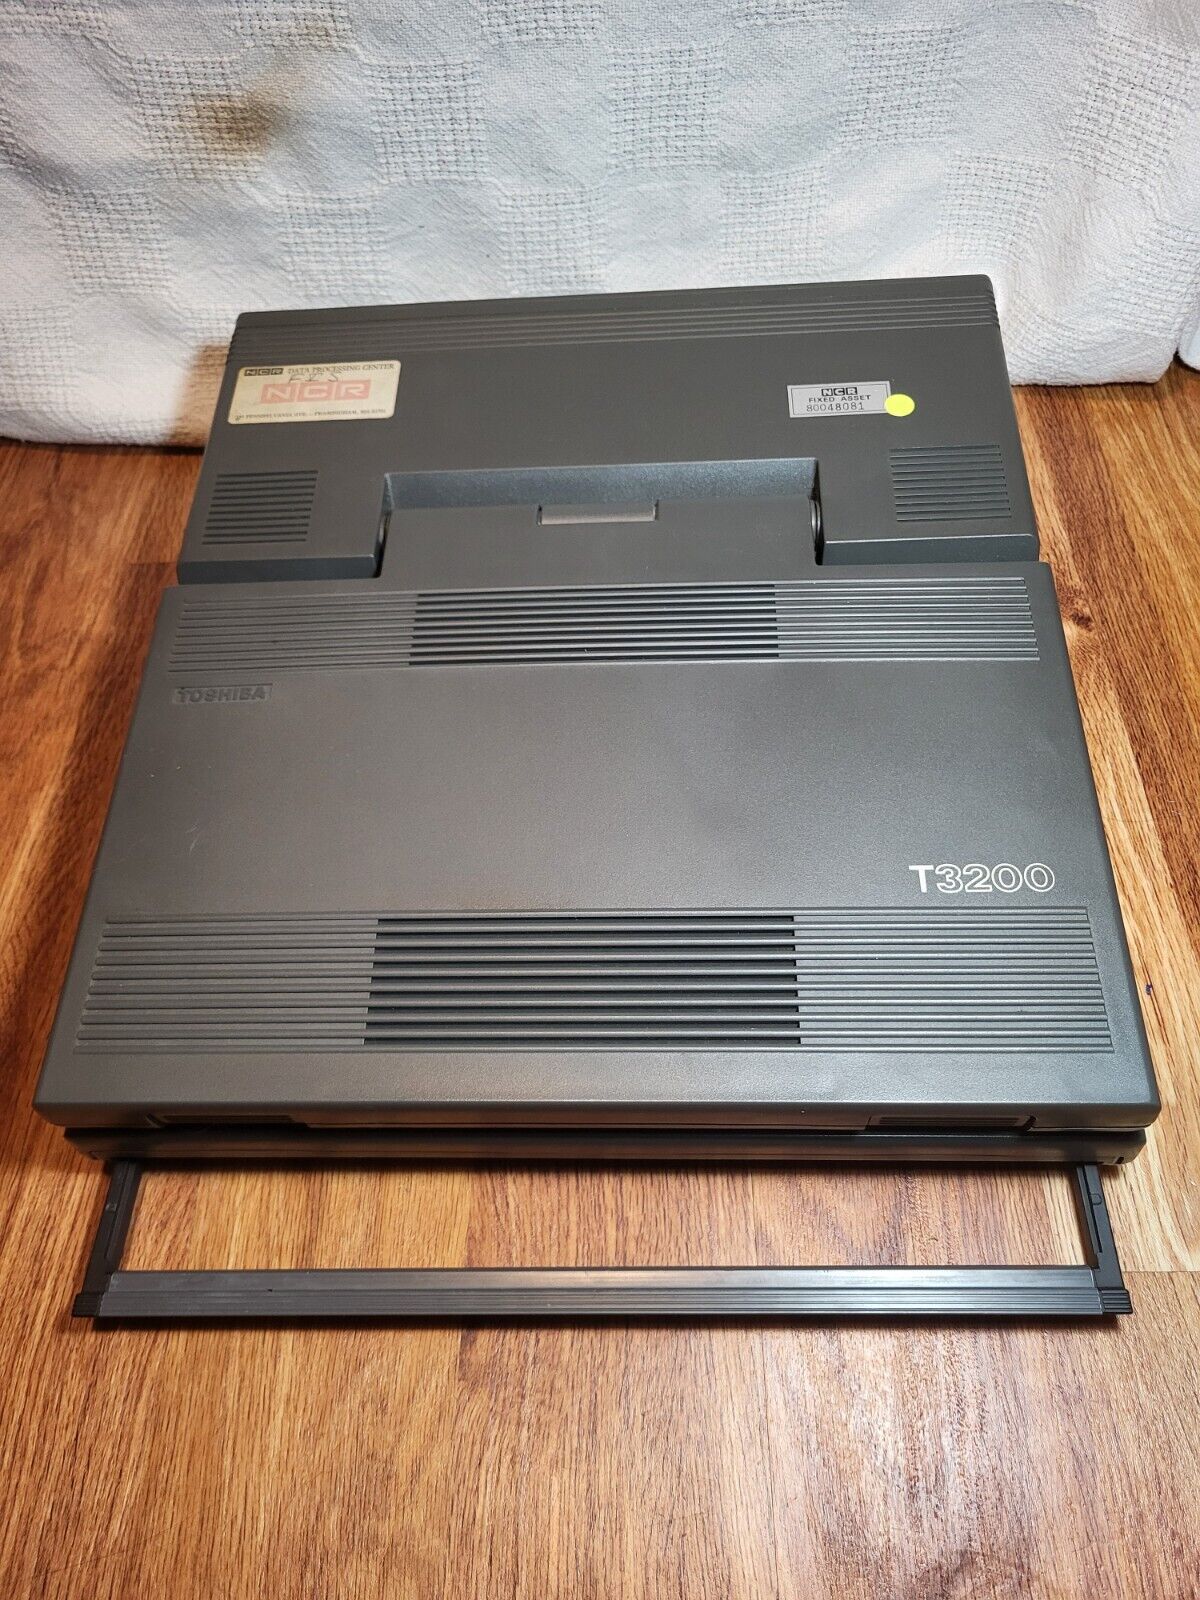 Vintage Toshiba T3200 System Unit Portable Computer Laptop Read